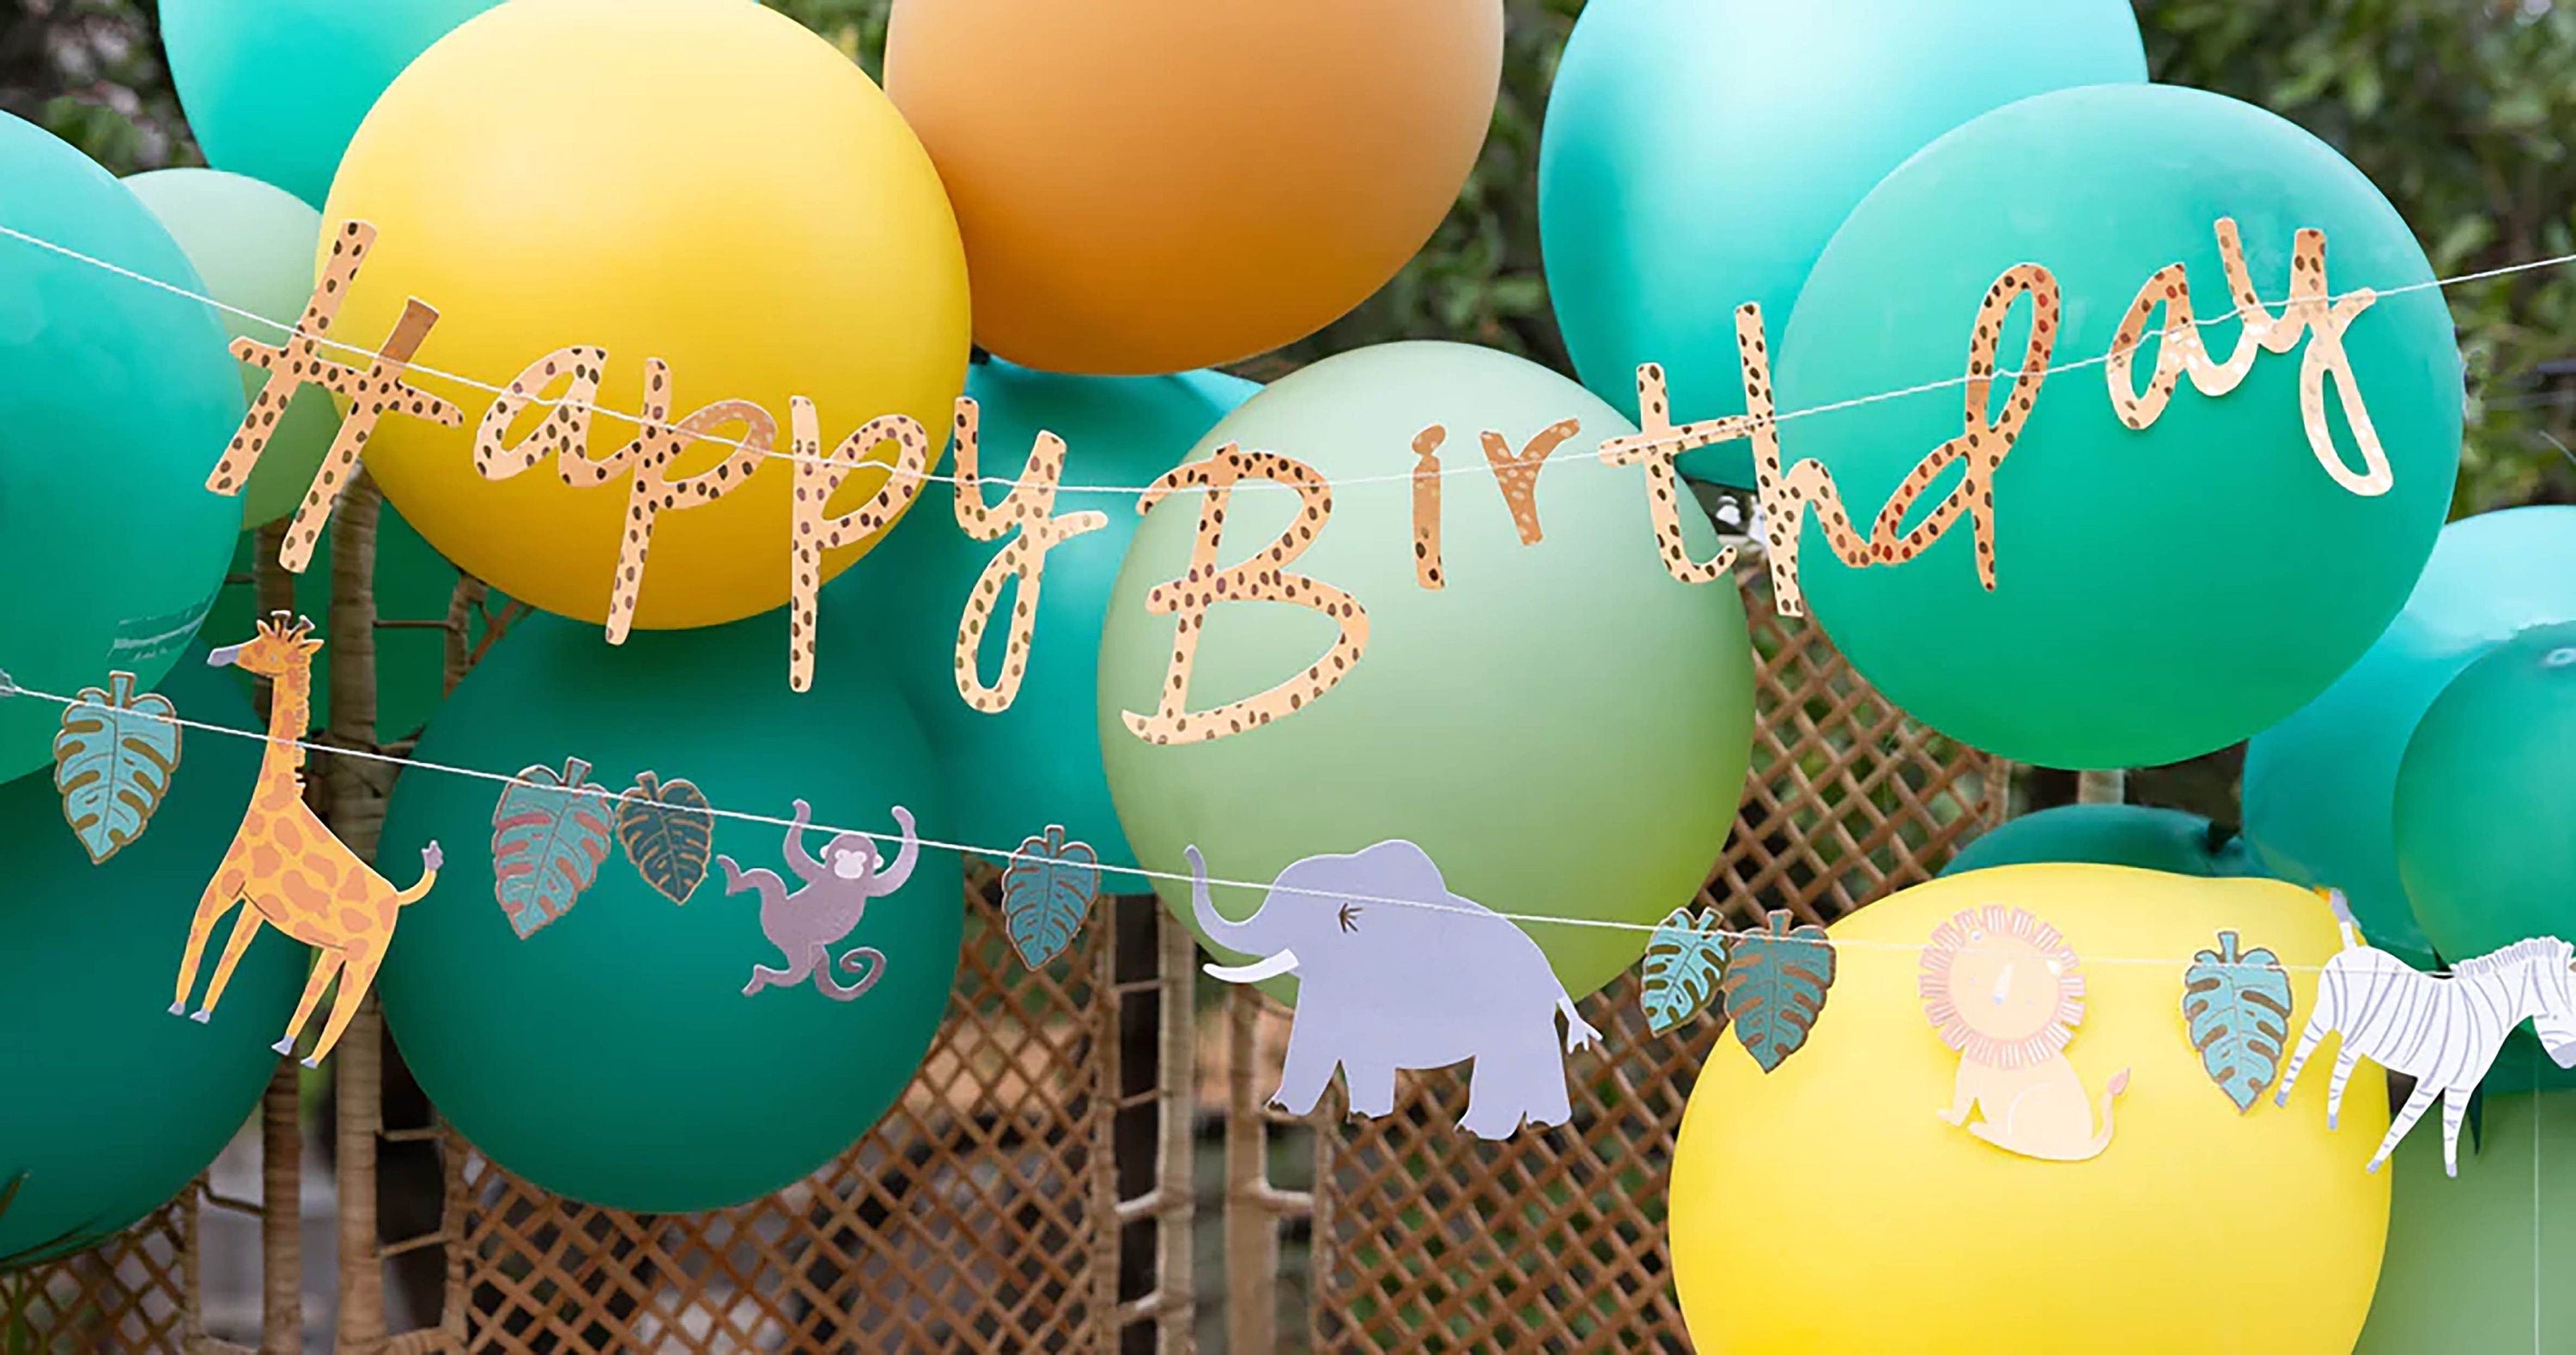 Safari Party Decorations | Safari Birthday Party Decorations - Safari Party - Safari Birthday Party - Adventure Party - Wild One Birthday